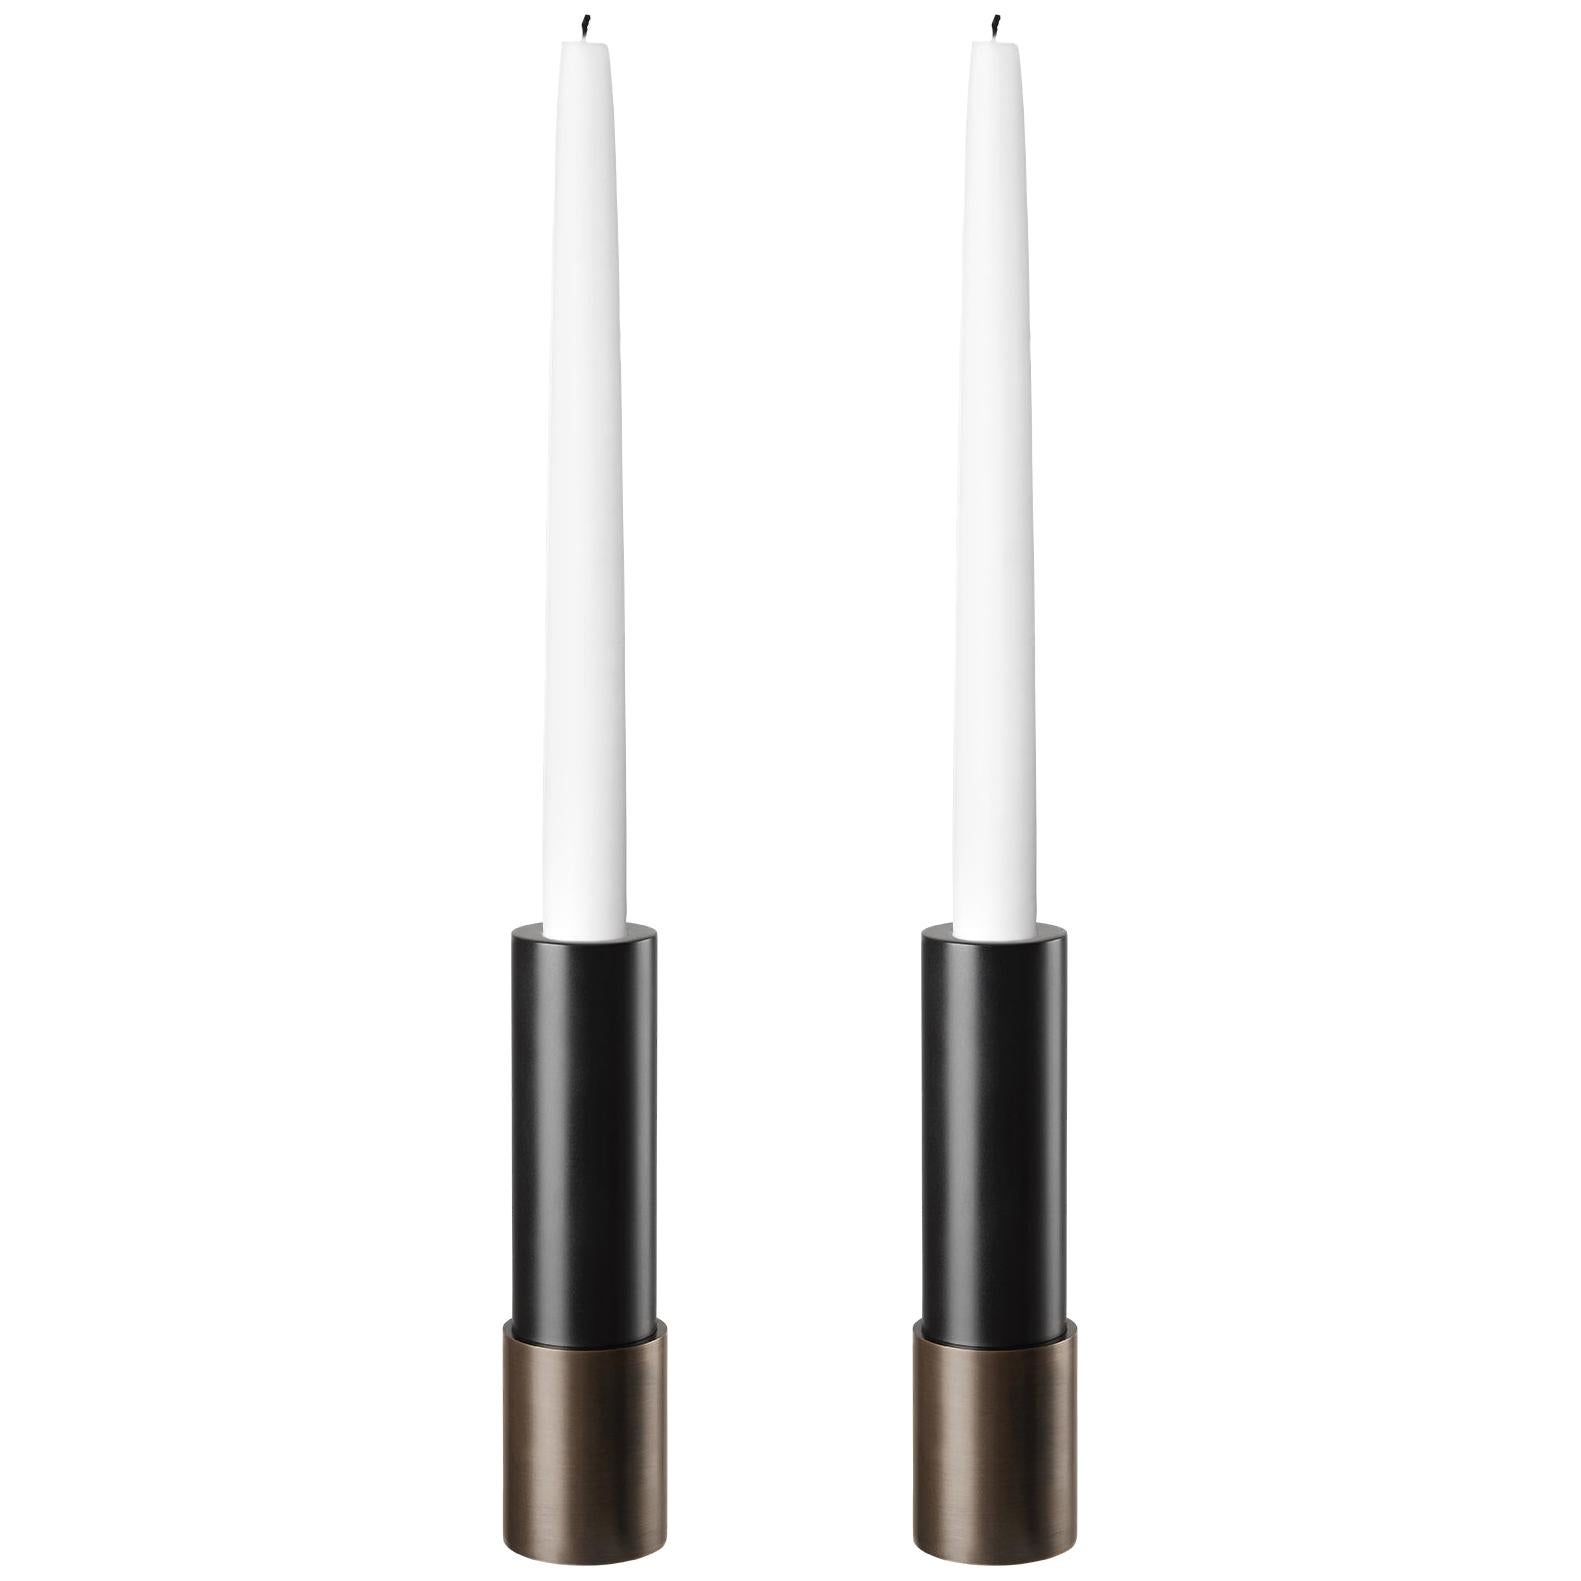 Pair of Candlesticks Model #17 by Space Copenhagen for Gubi For Sale